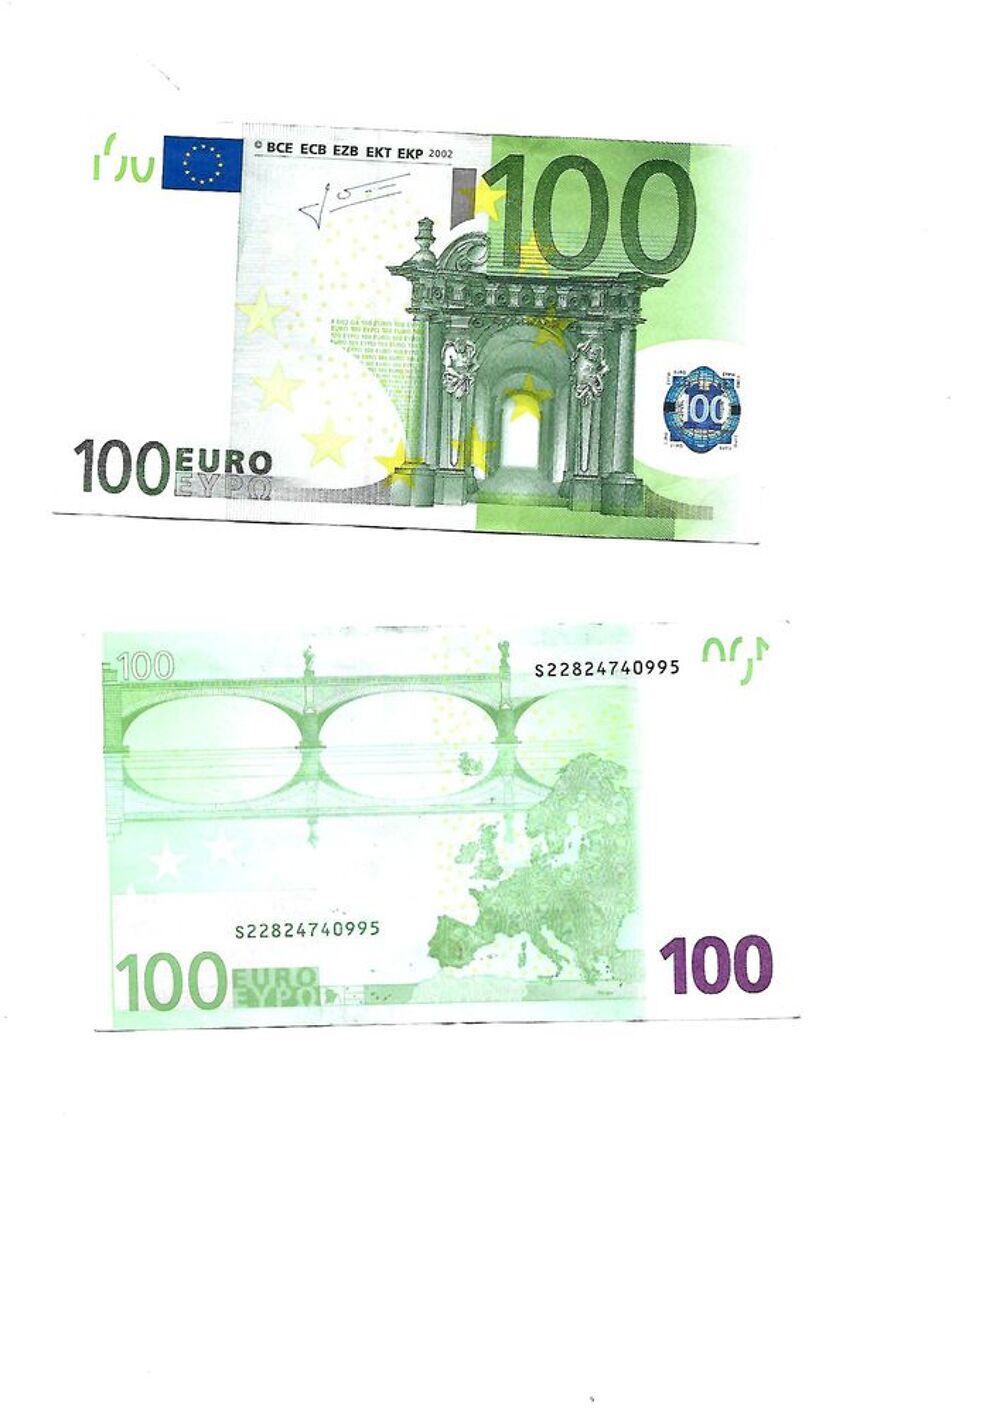 Billets de Banque en EUROS de 2002 